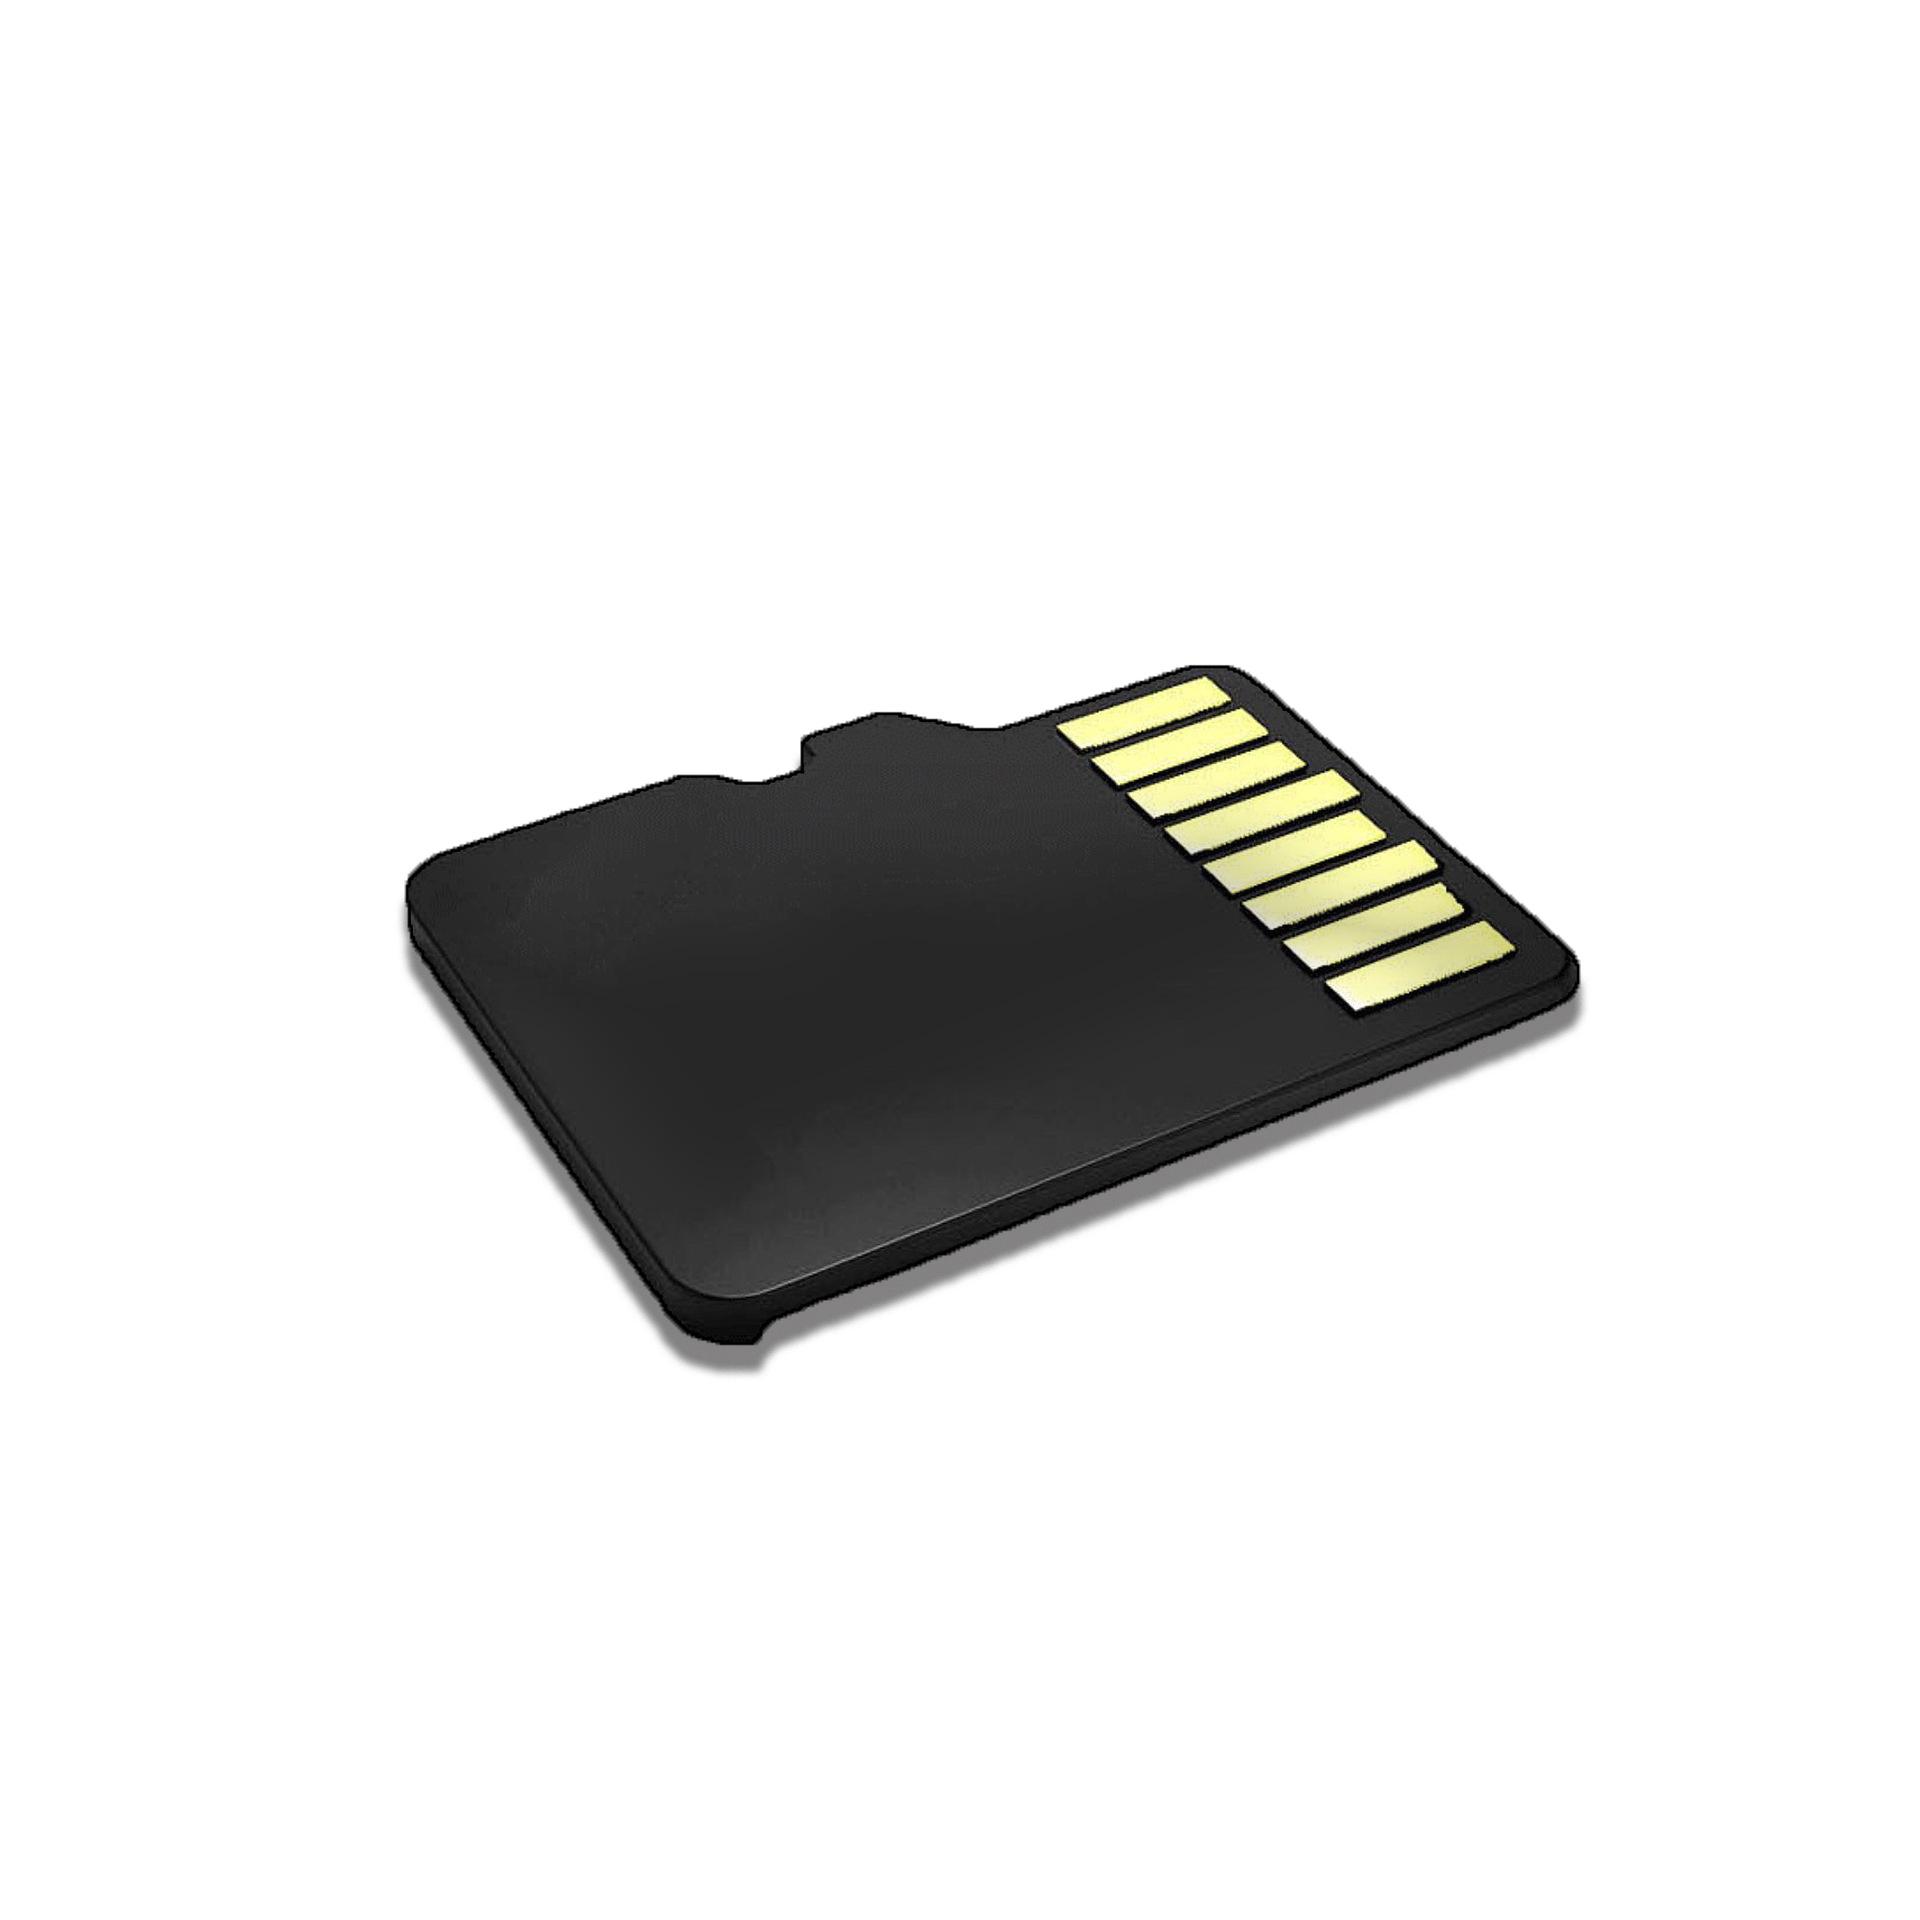  T5 Portable SSD - 500GB - USB 3.1 External SSD (MU-PA500B/AM)